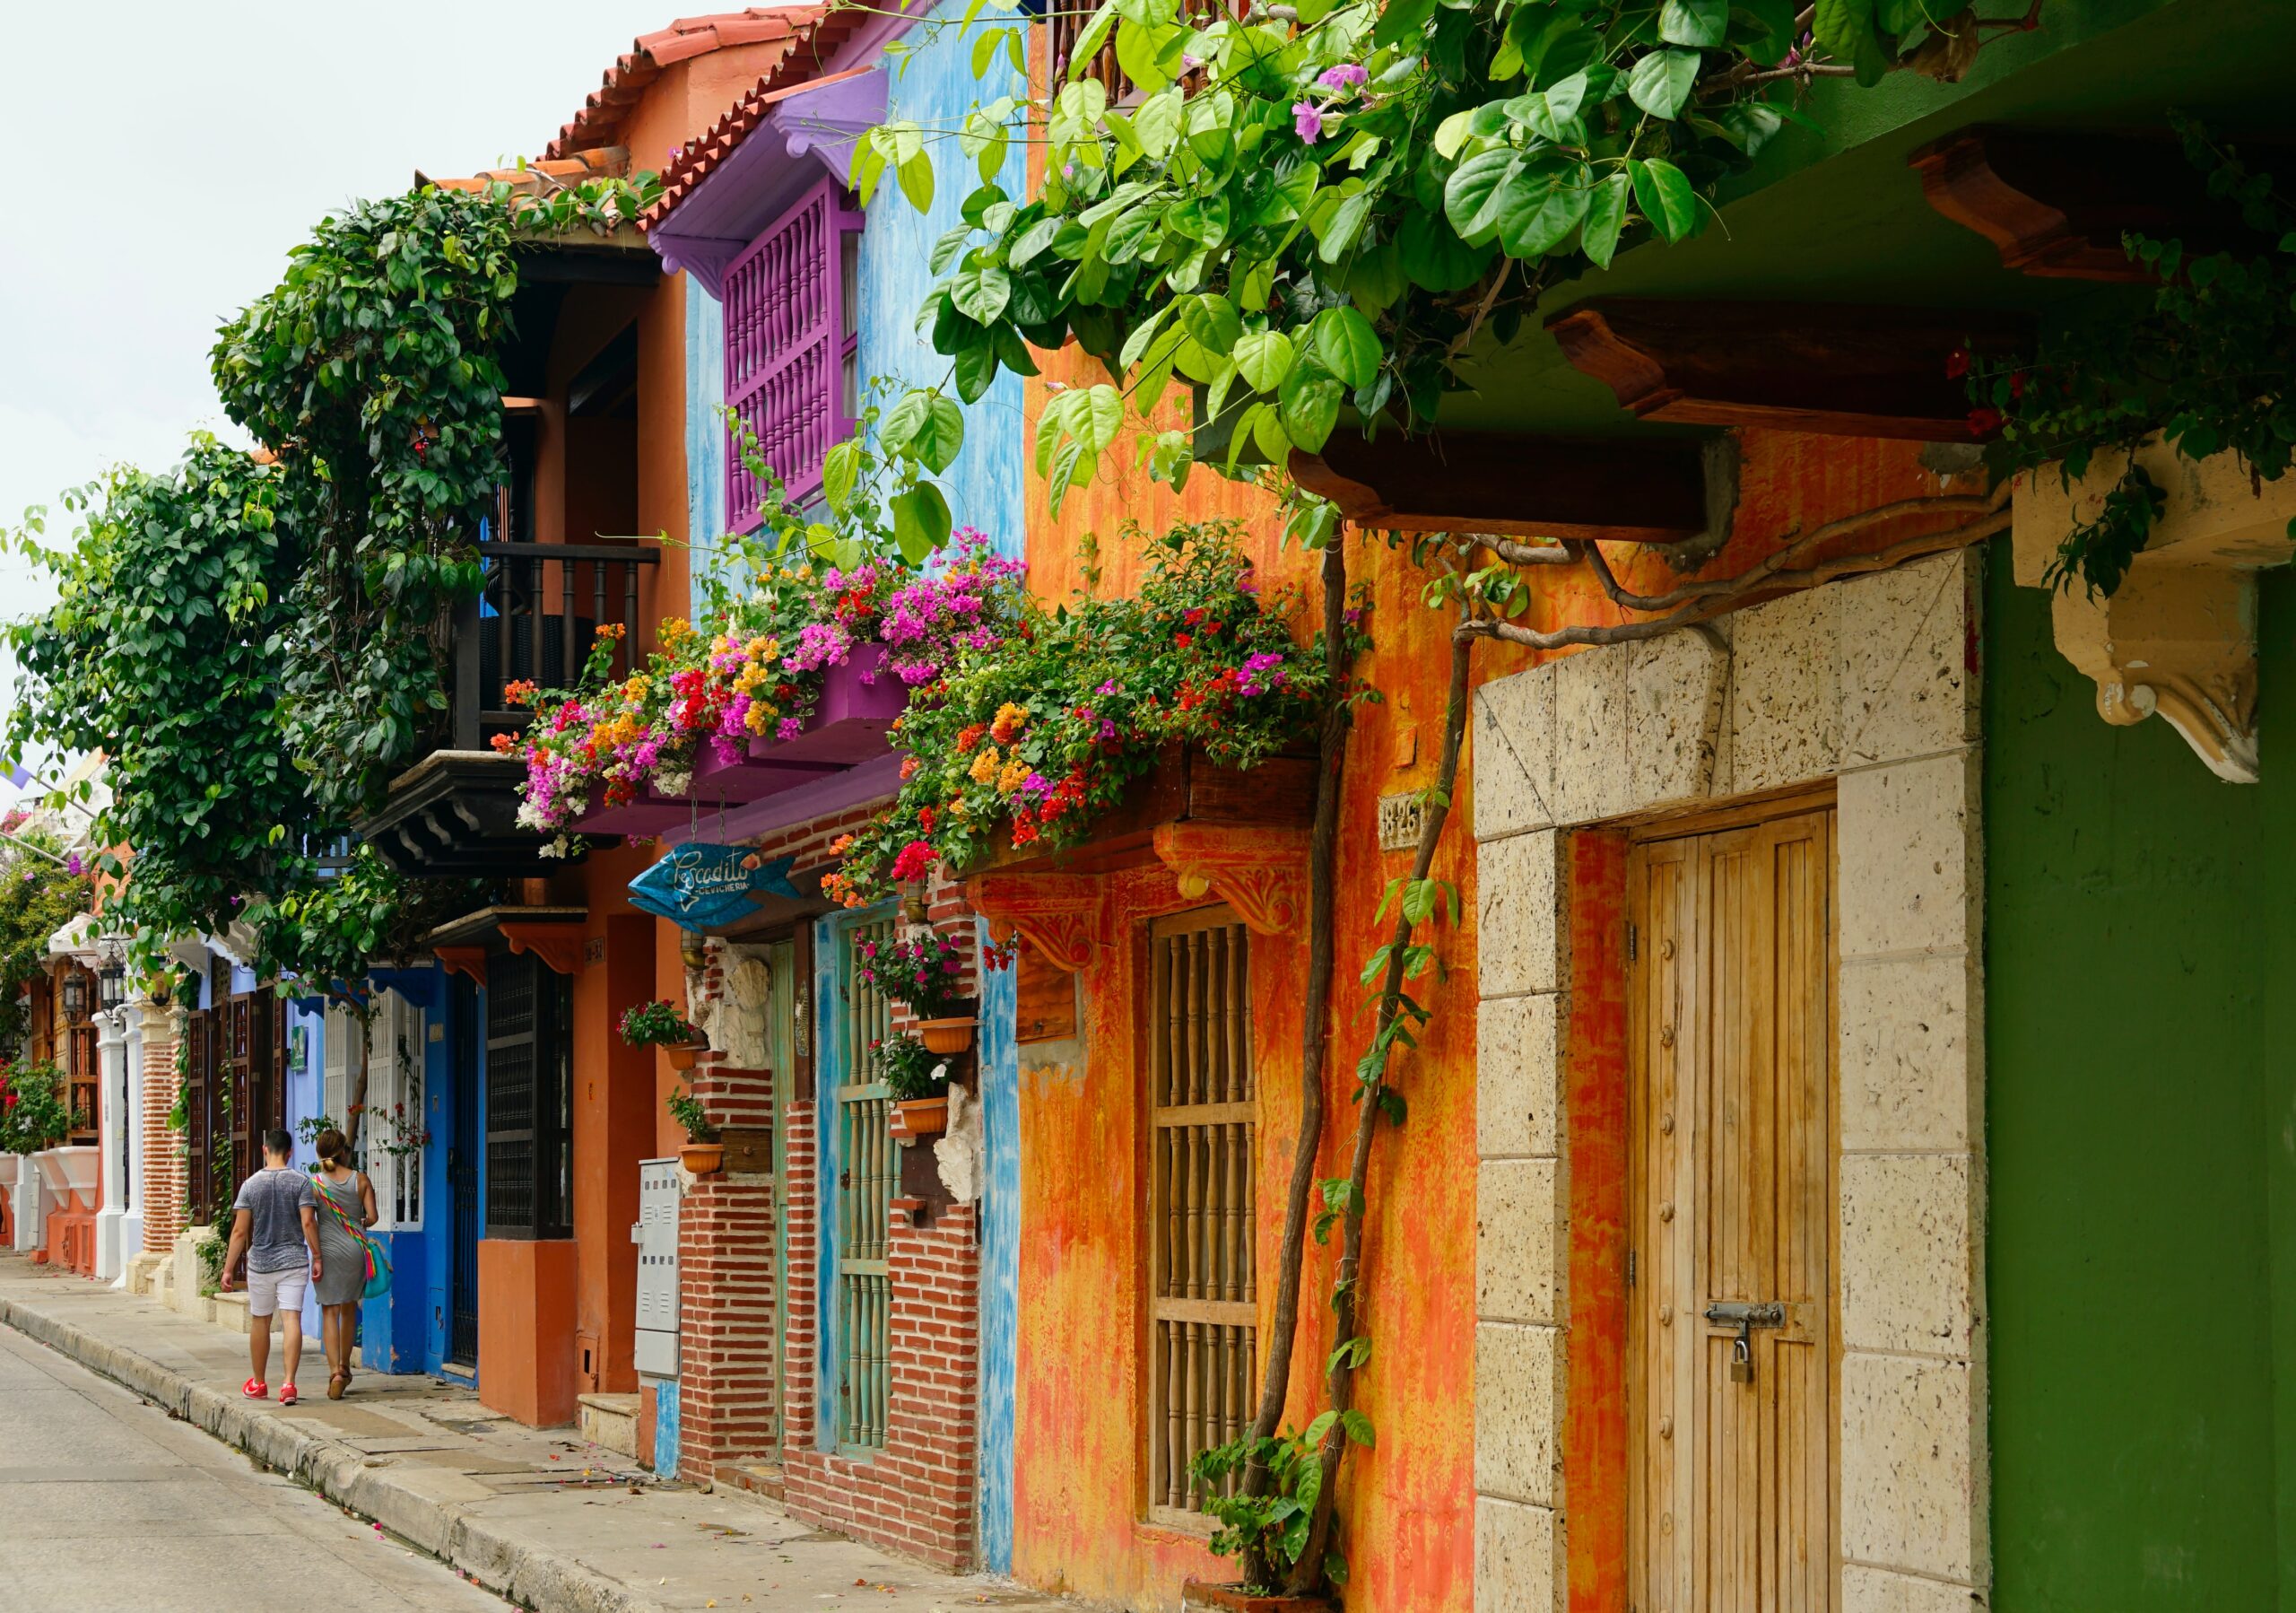 Cartagena, Colombia (Photo Credit: Ricardo Gomez Angel on Unsplash)